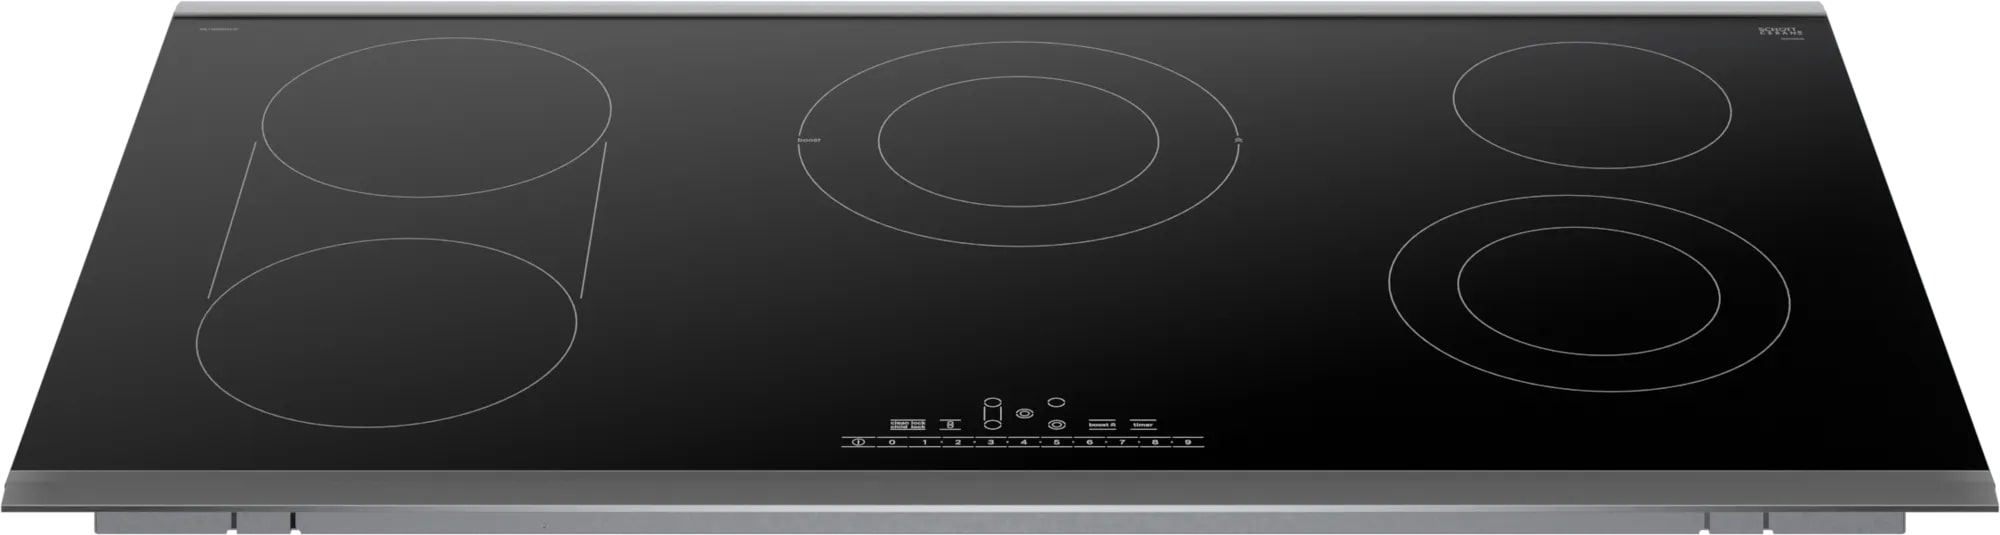 Bosch - 37 inch wide Electric Cooktop in Black - NET8669SUC